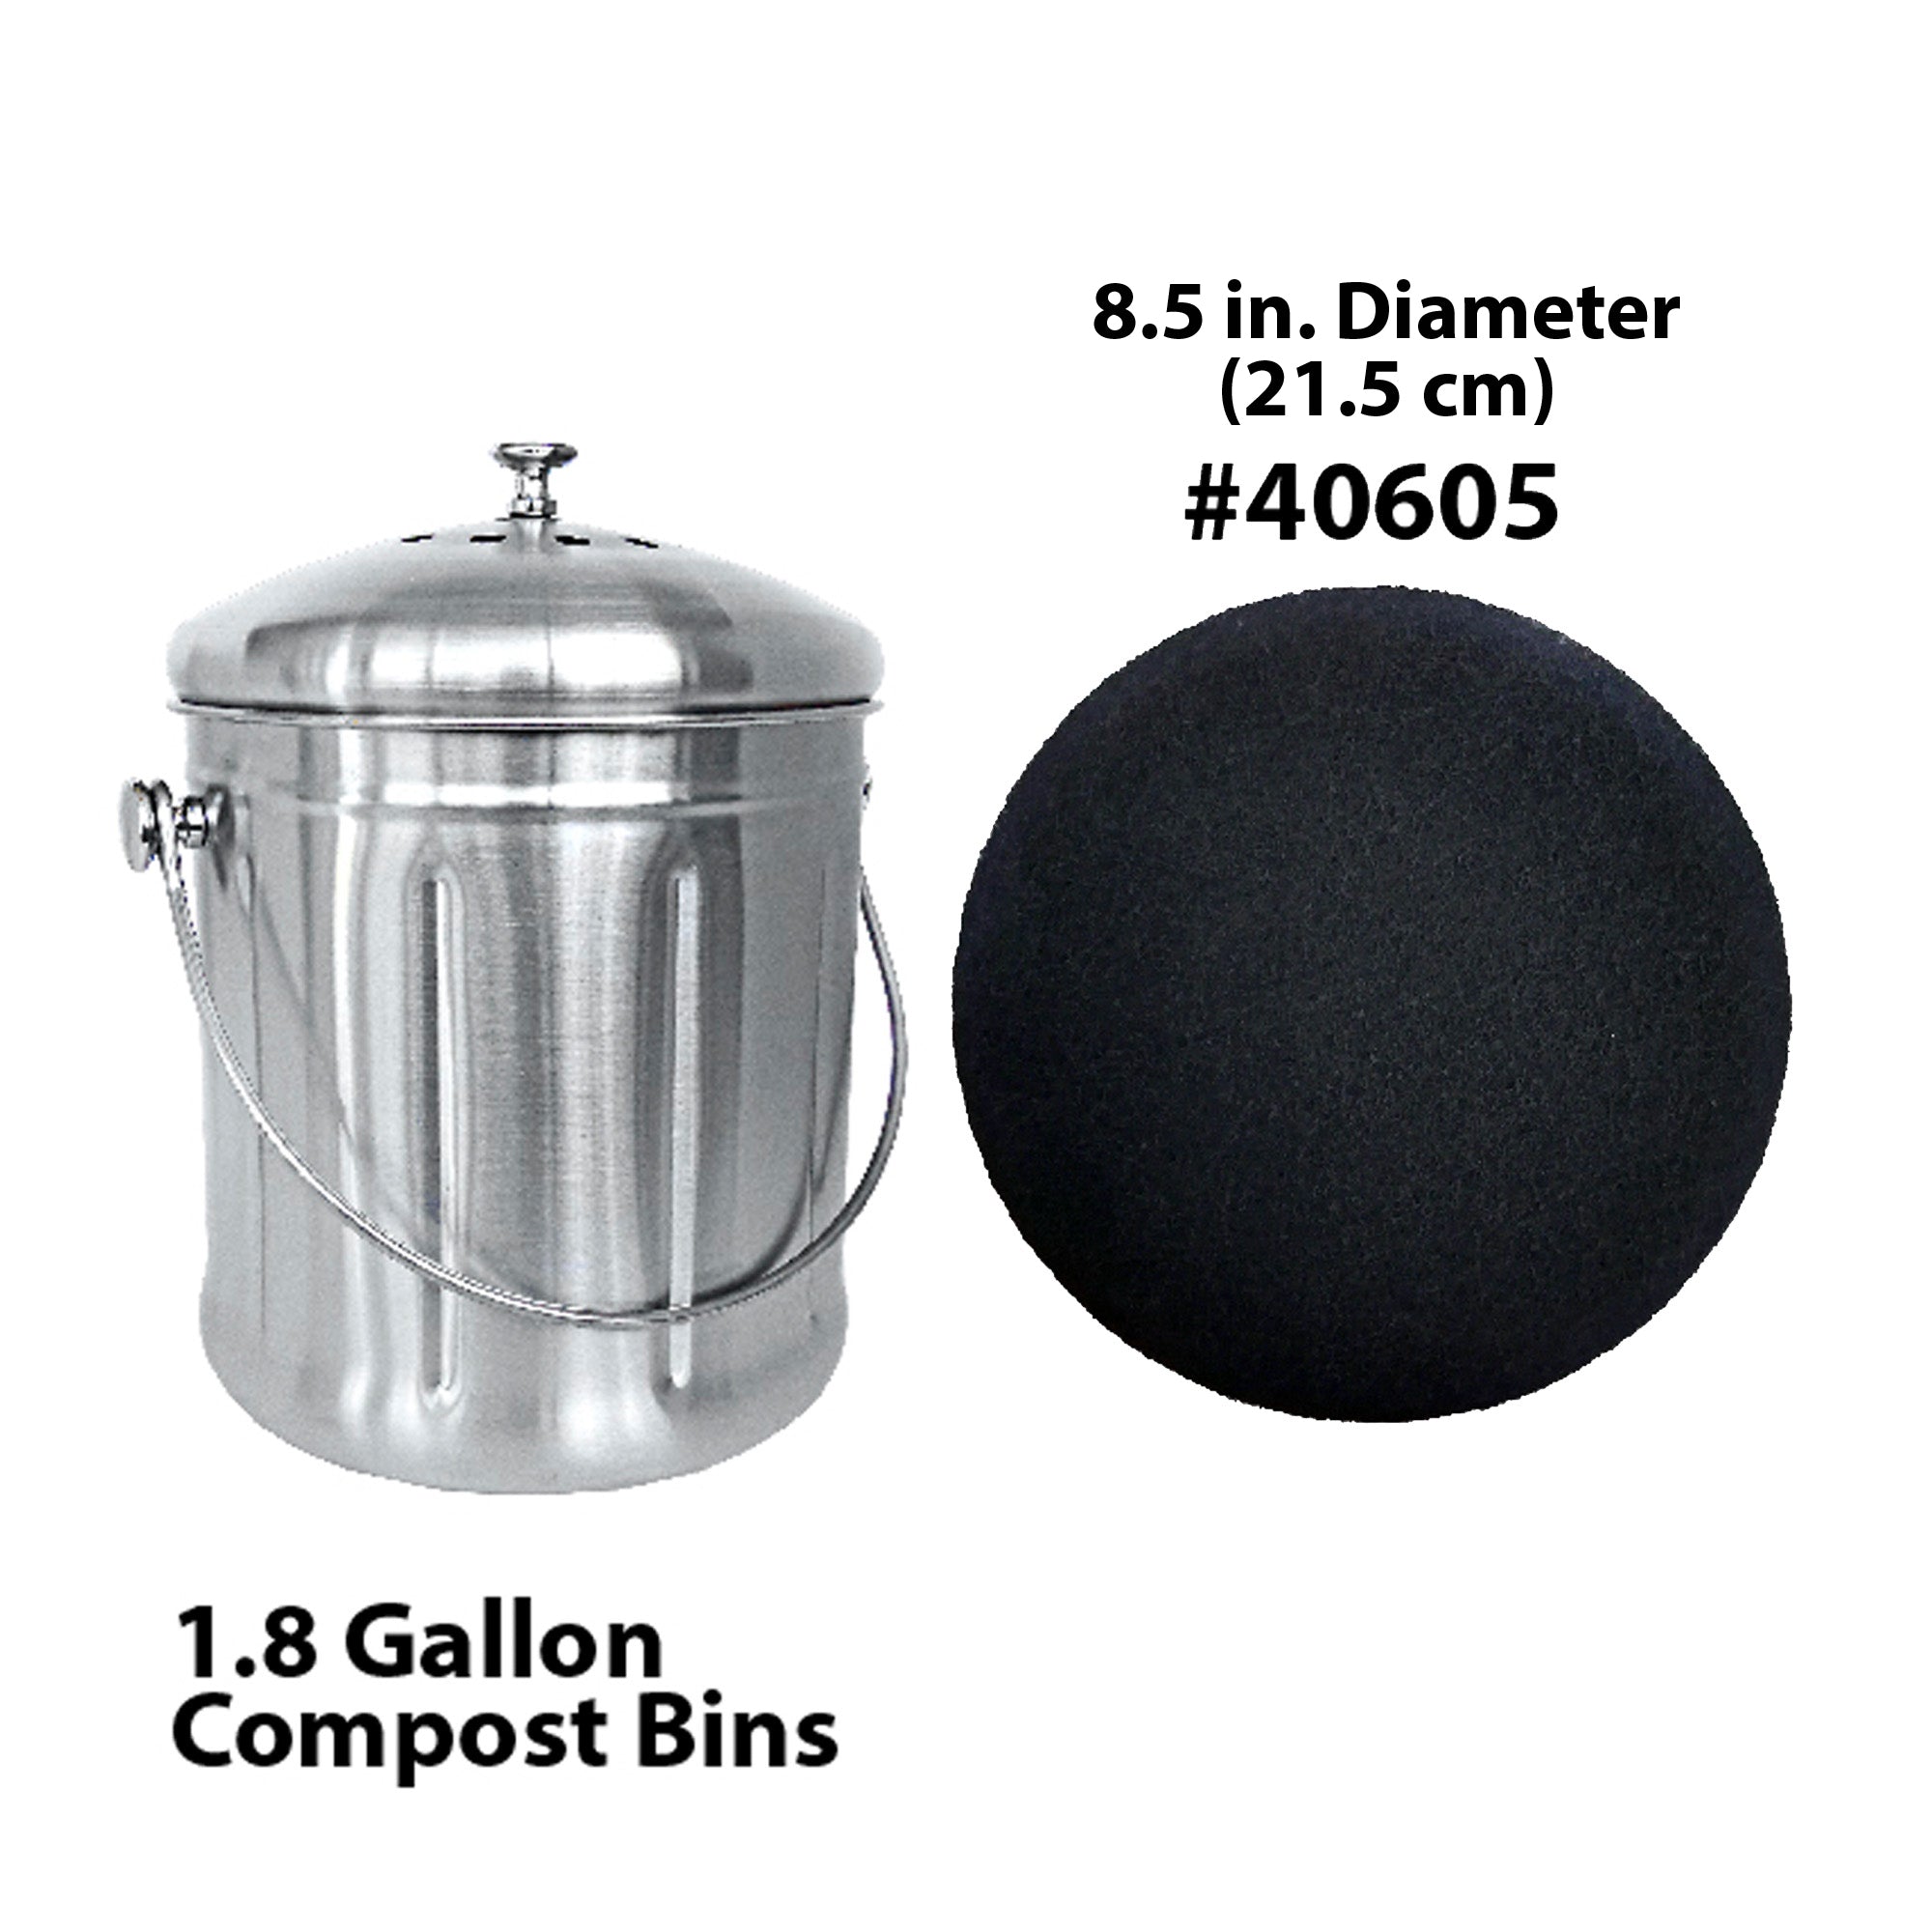 Compost Bin With Filter - Vintage – Relish Decor